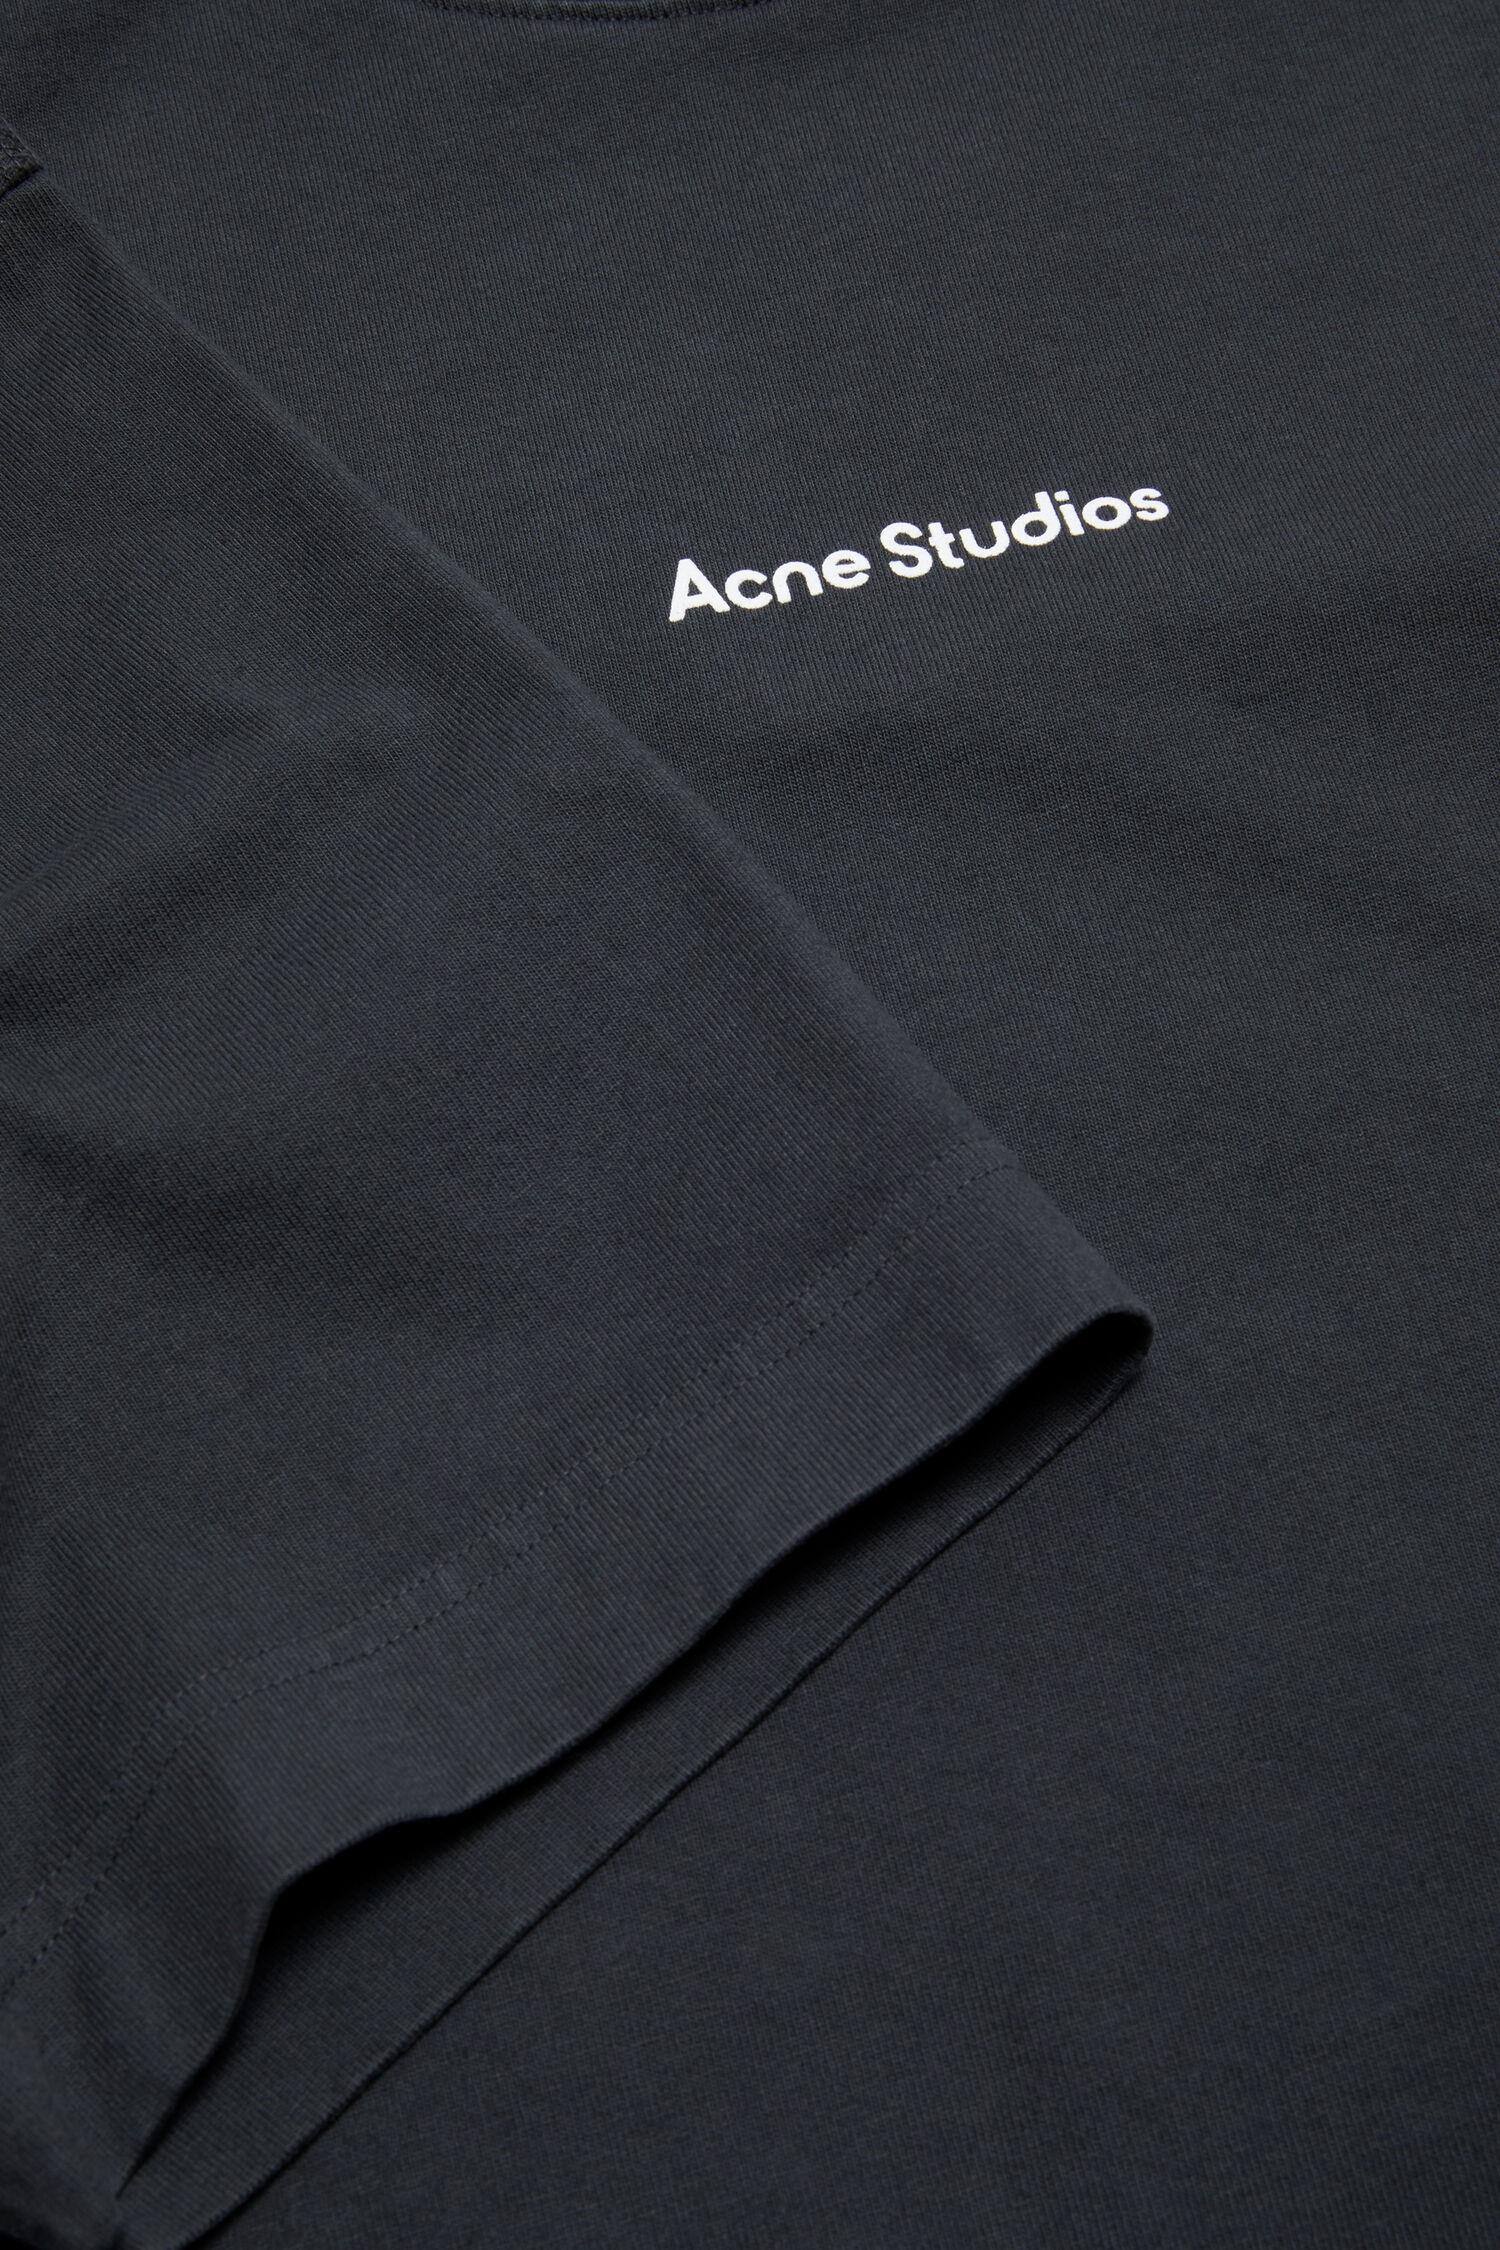 Acne New Logo Tee T-shirt Vasket Sort - modostore.no